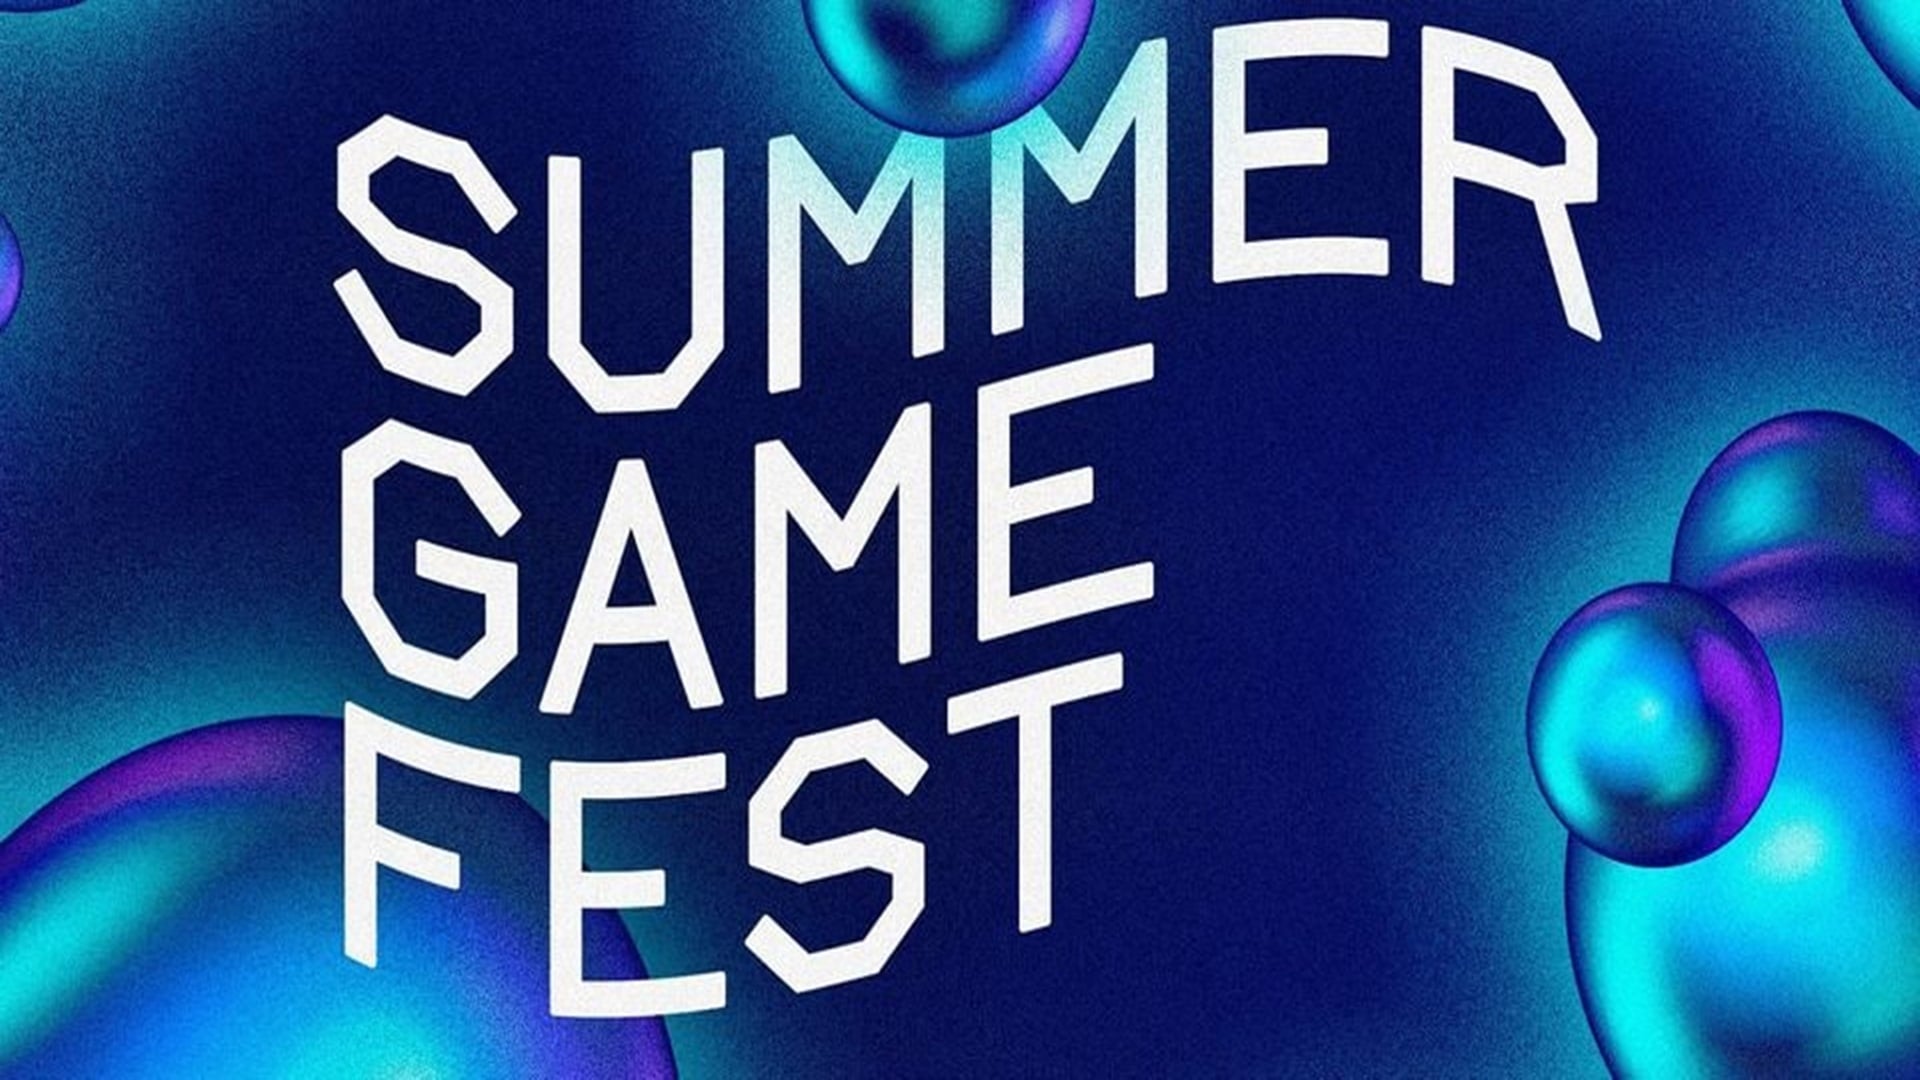 Summer Game Fest 2022 confirma la fecha del evento, GamersRD